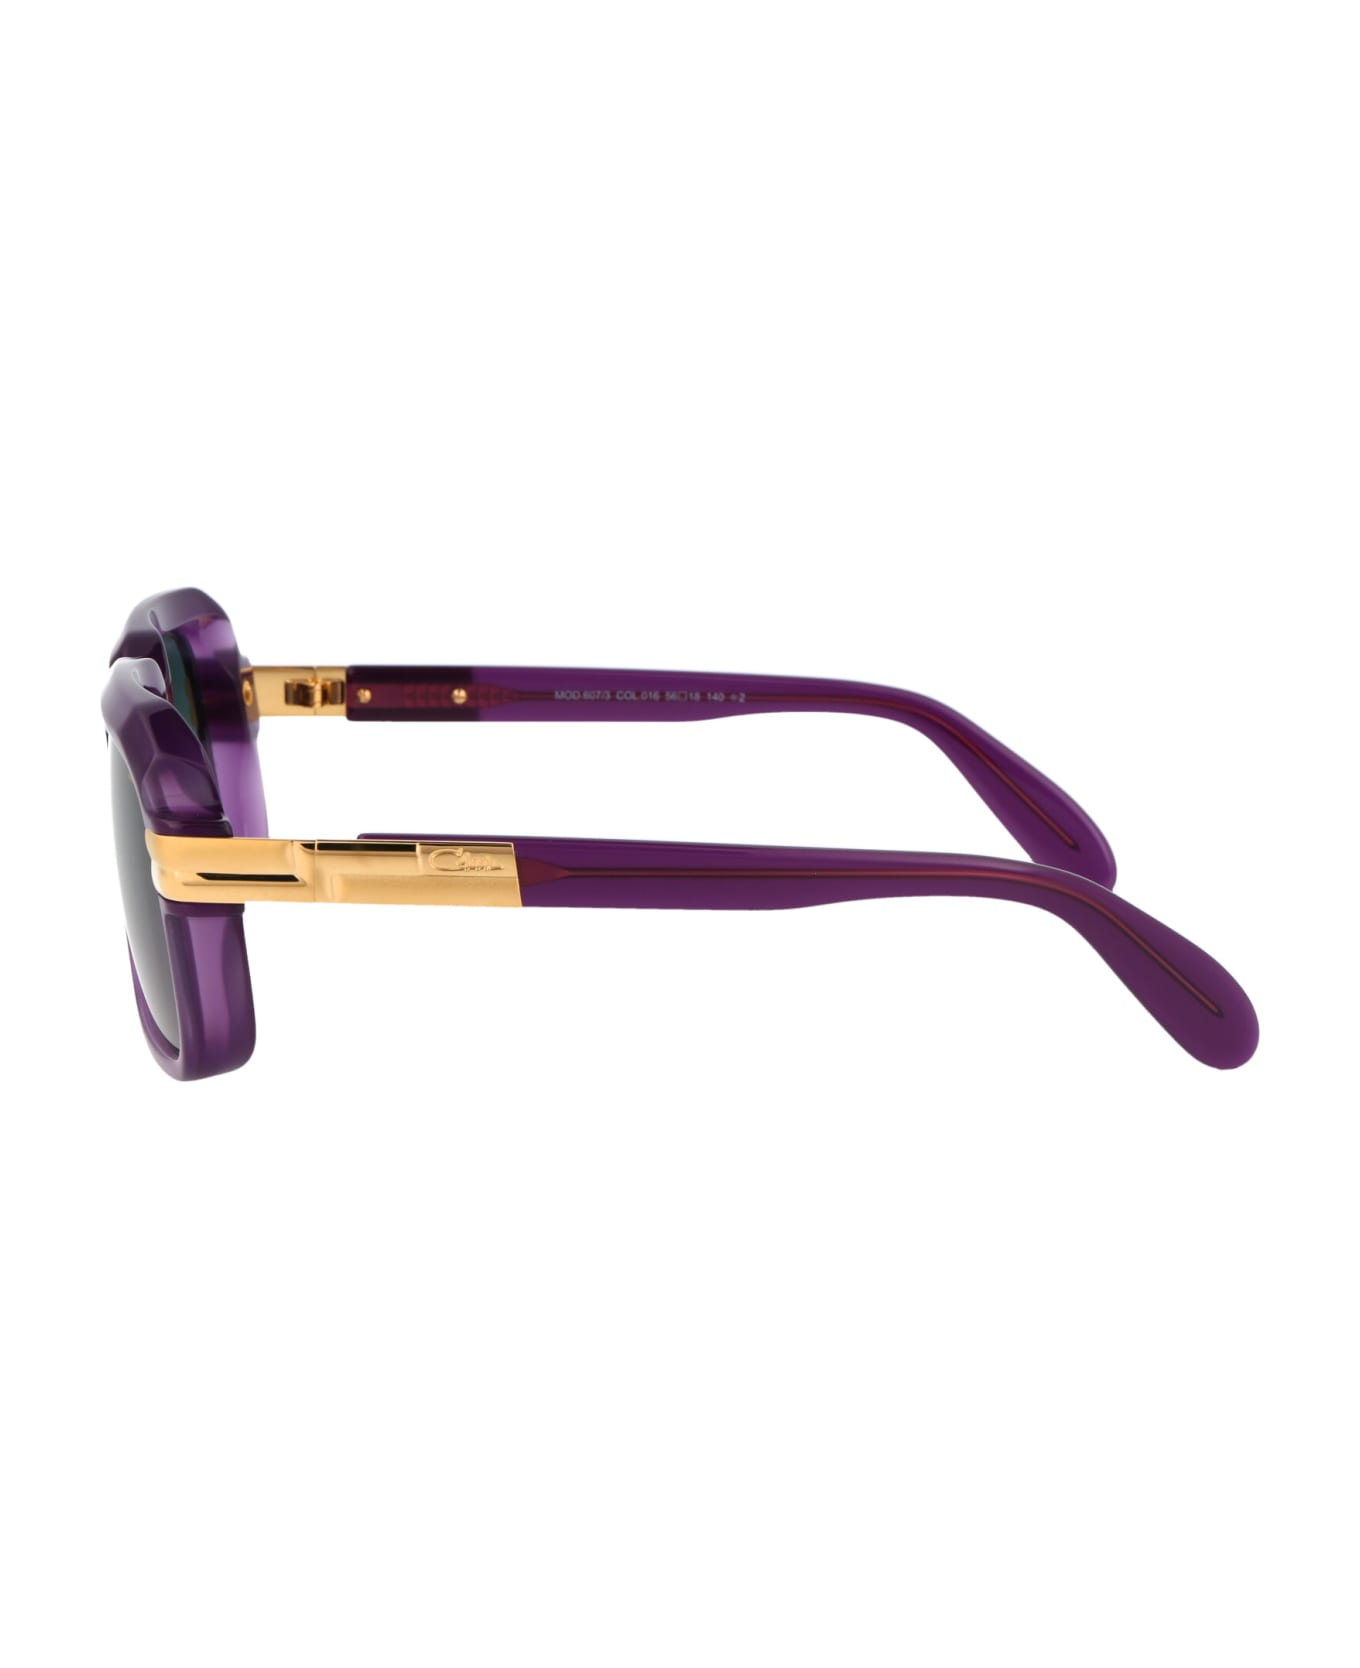 Cazal Mod. 607/3 Sunglasses - 016 VIOLET